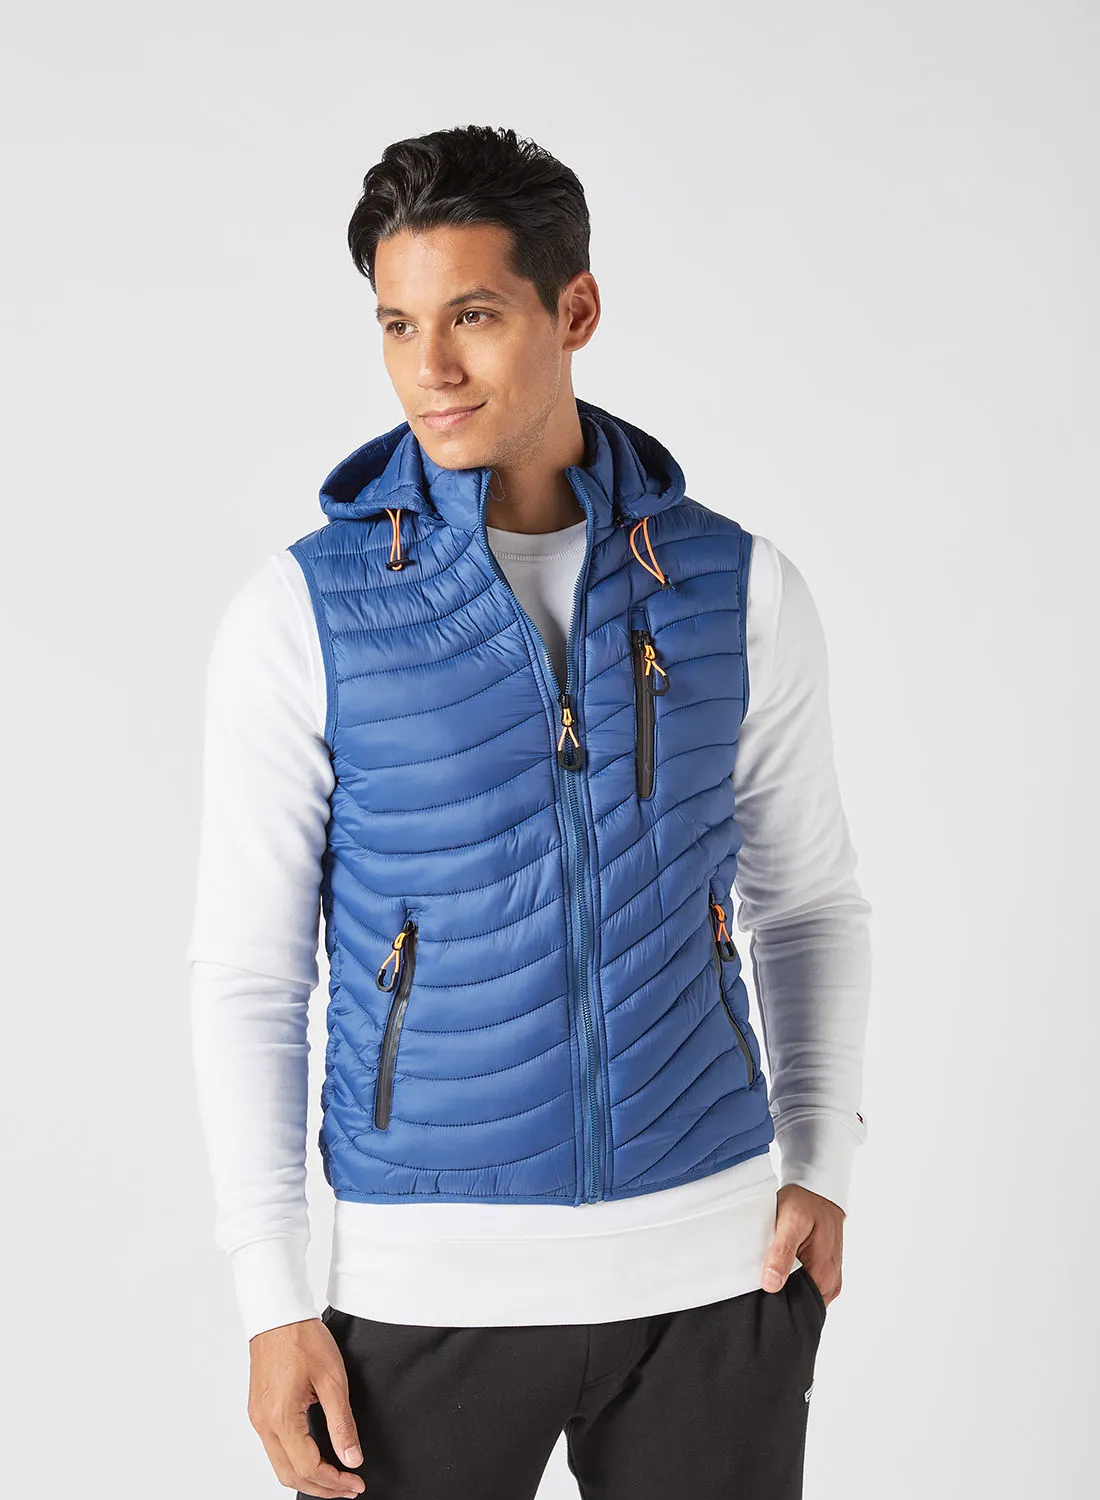 Athletiq Men's Casual Hooded And Side Pockets Detail Puffer Vest Jacket Azure Blue